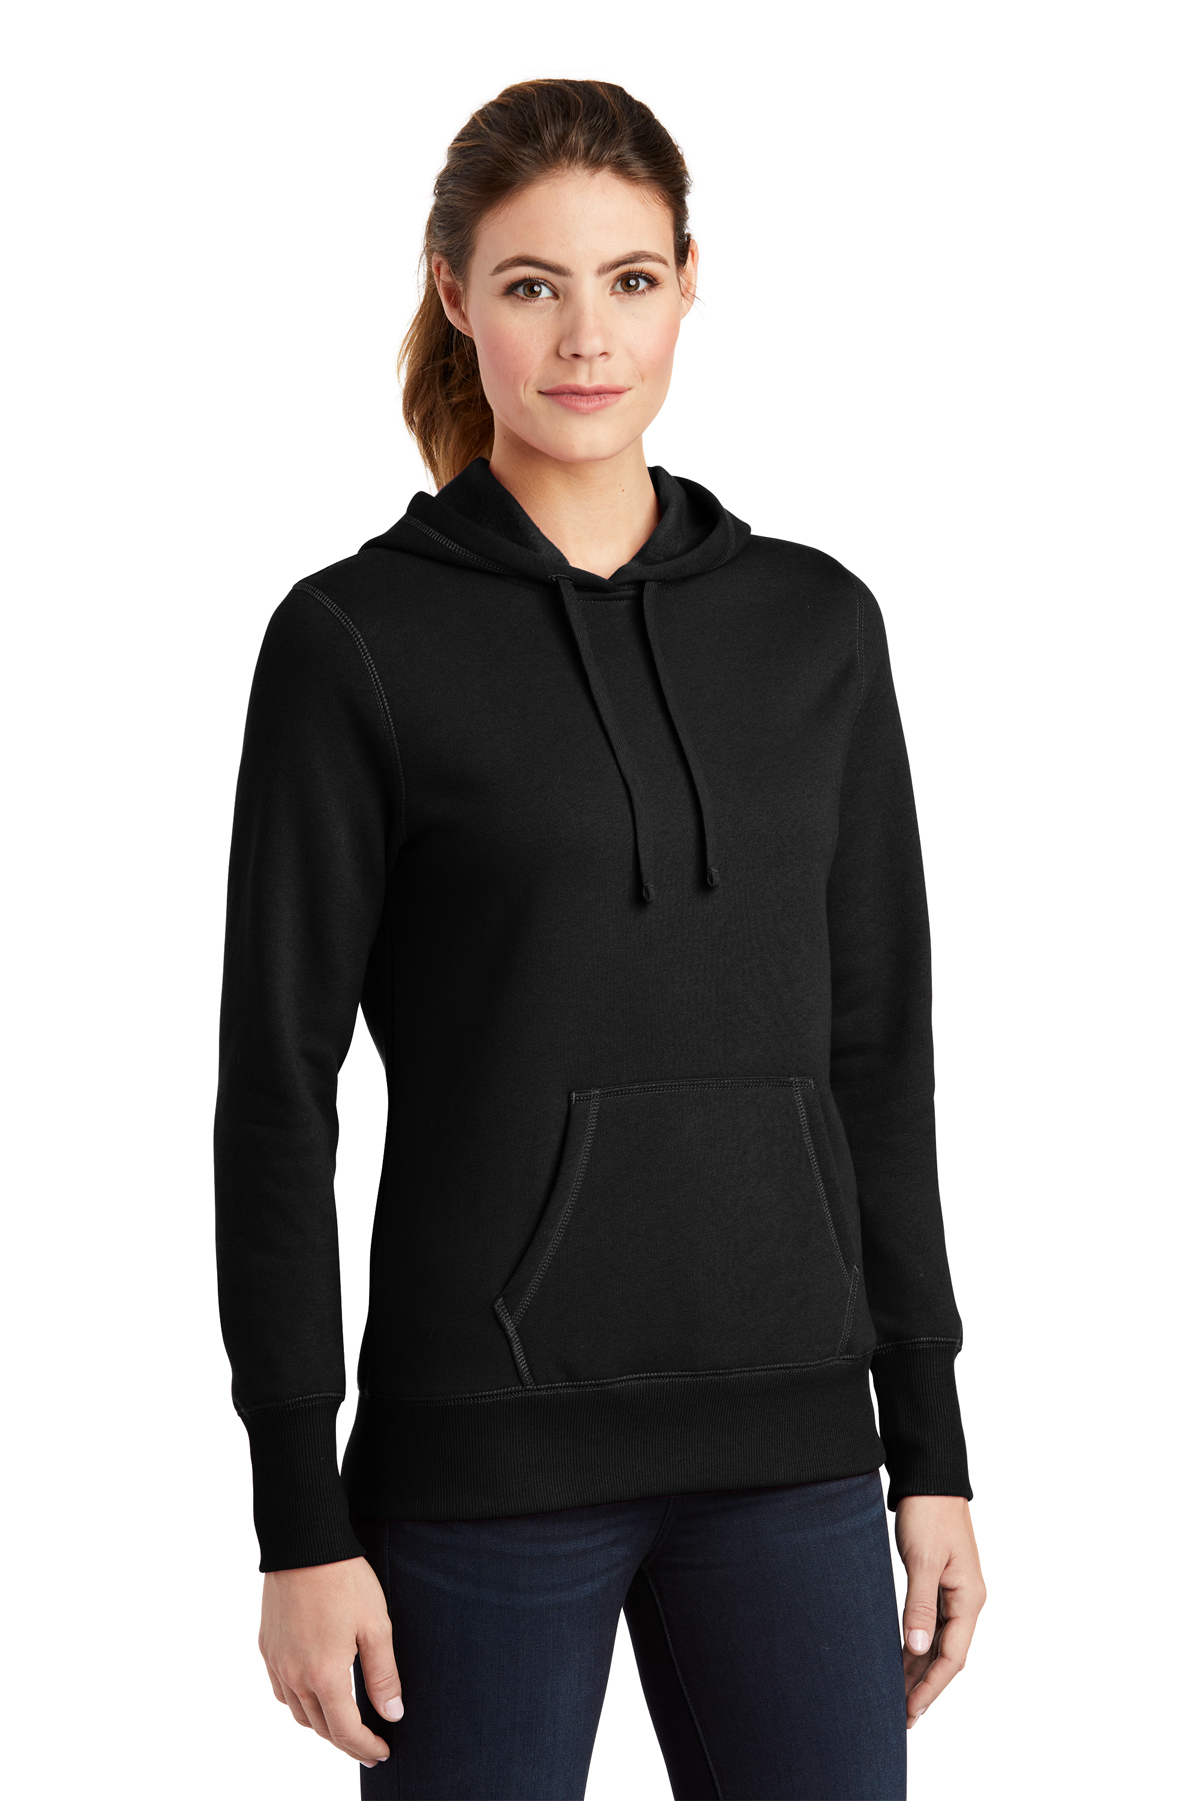  Hoodie for Women Casual Sports Hooded Sweatshirt